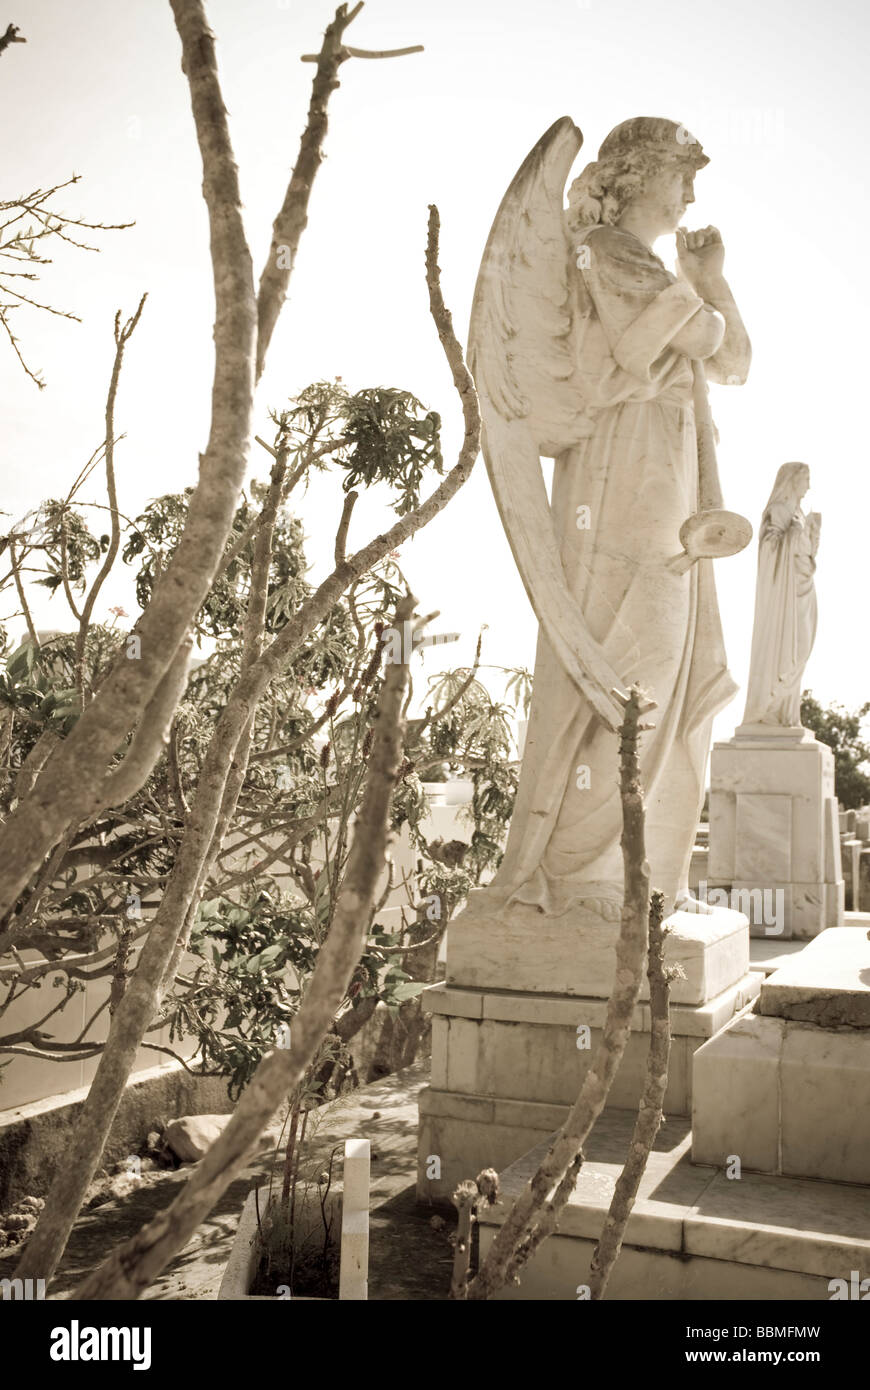 Kuba, Cienfuegos. Details der Denkmäler und Gräber auf dem Friedhof, Cienfuegos Stockfoto